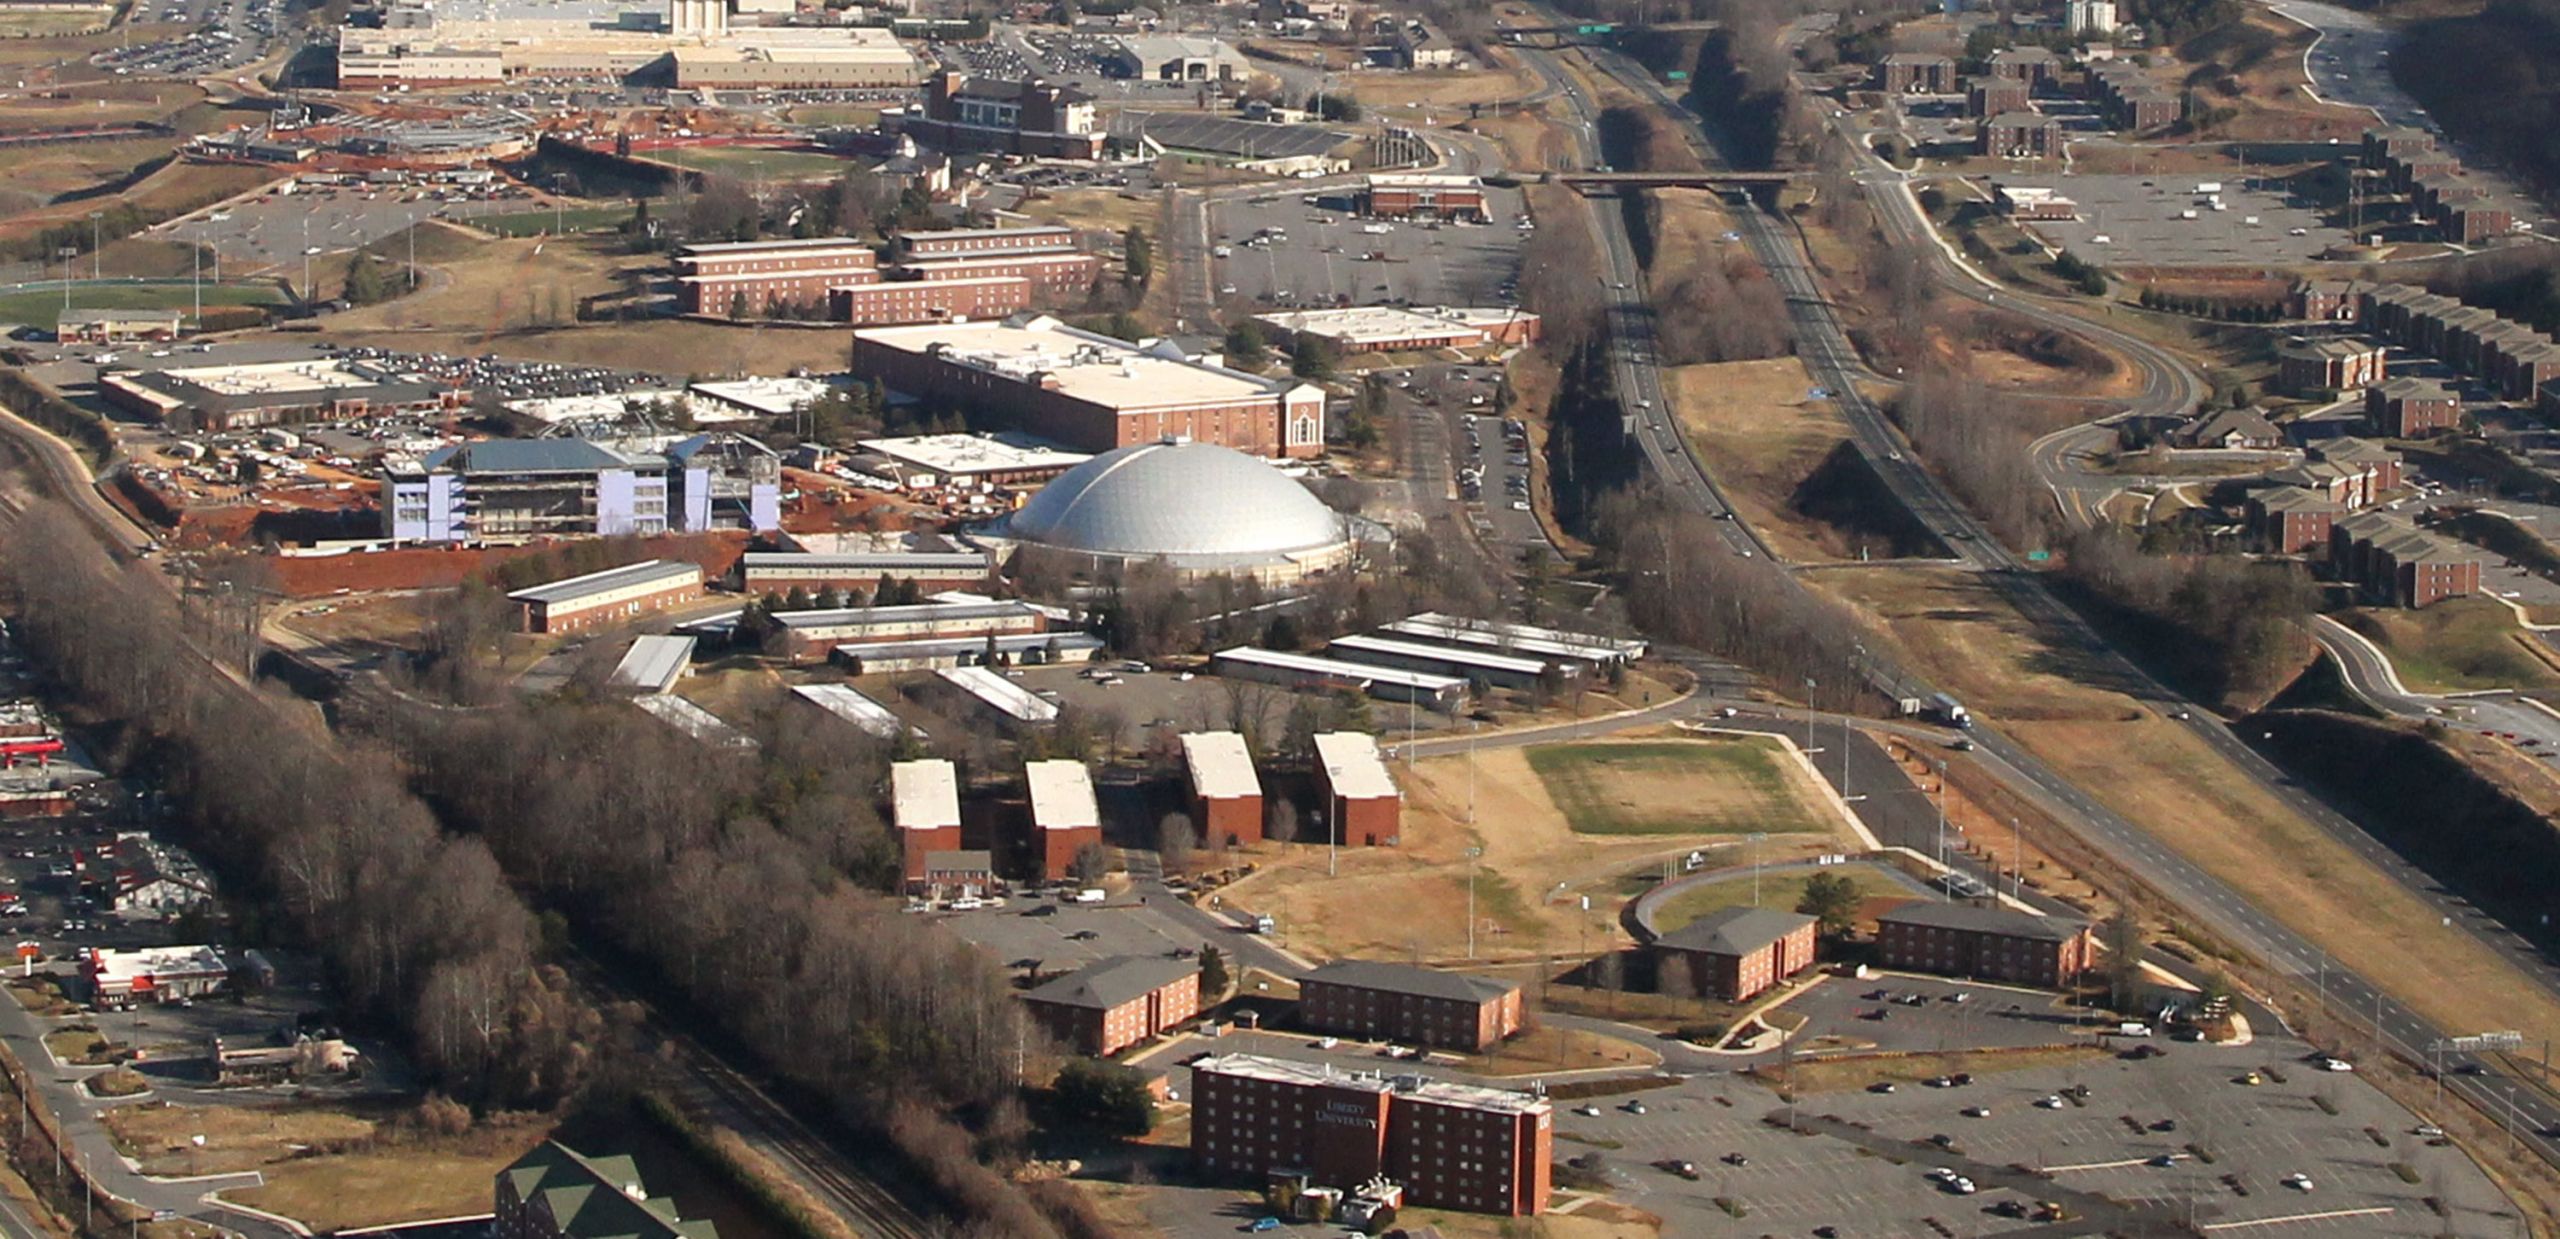 Liberty University's campus